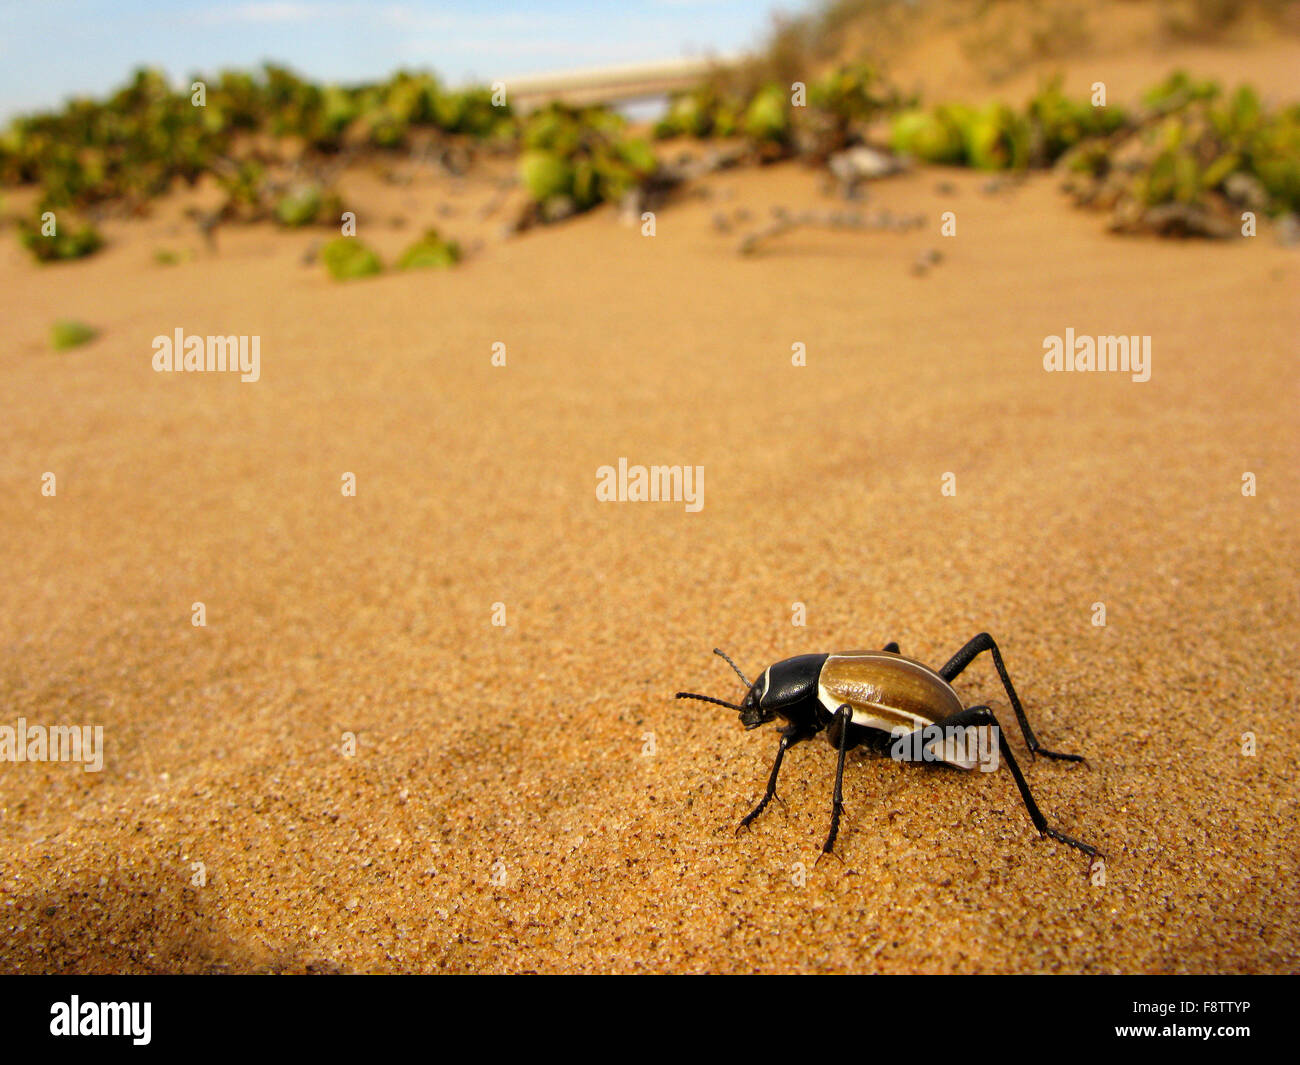 Tok-tokkie darkling beetle (Onymacris sp.) with brown elytrae and black body standing on the orange-yellow sand of Namib desert Stock Photo